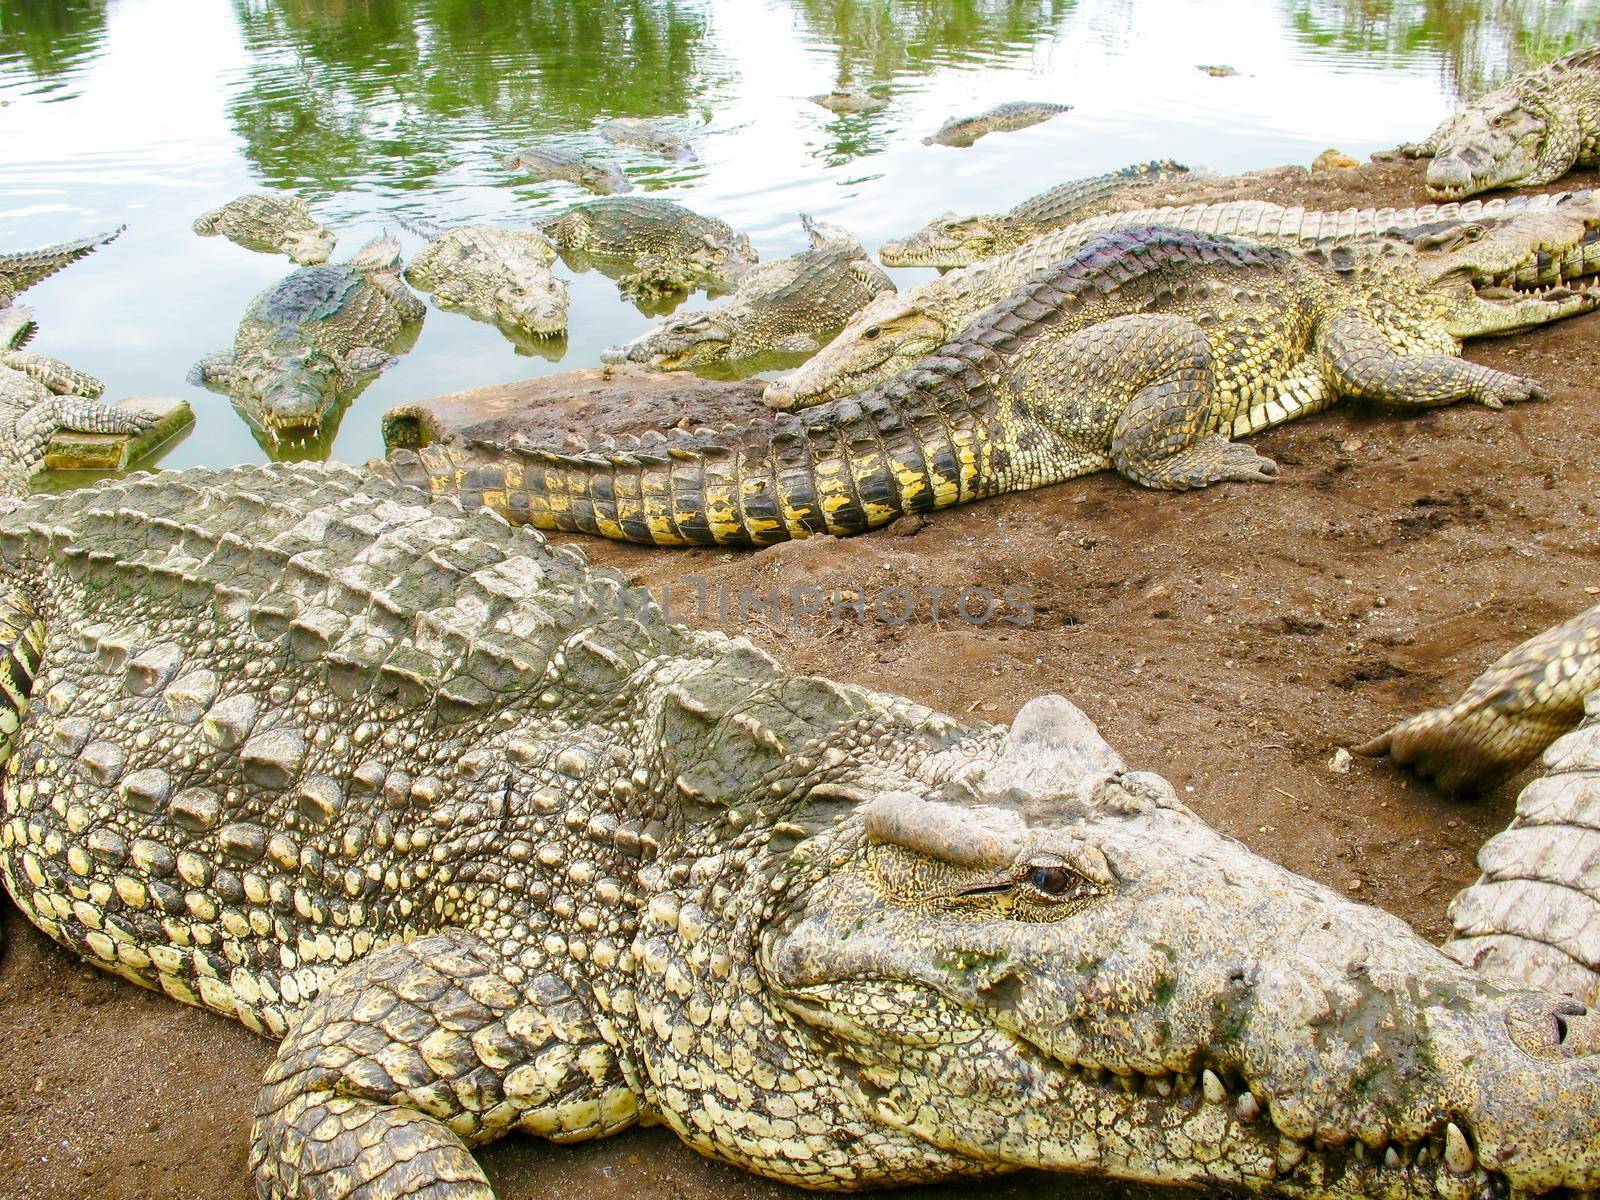 Huge crocodiles are lying on the ground. by kolesnikov_studio